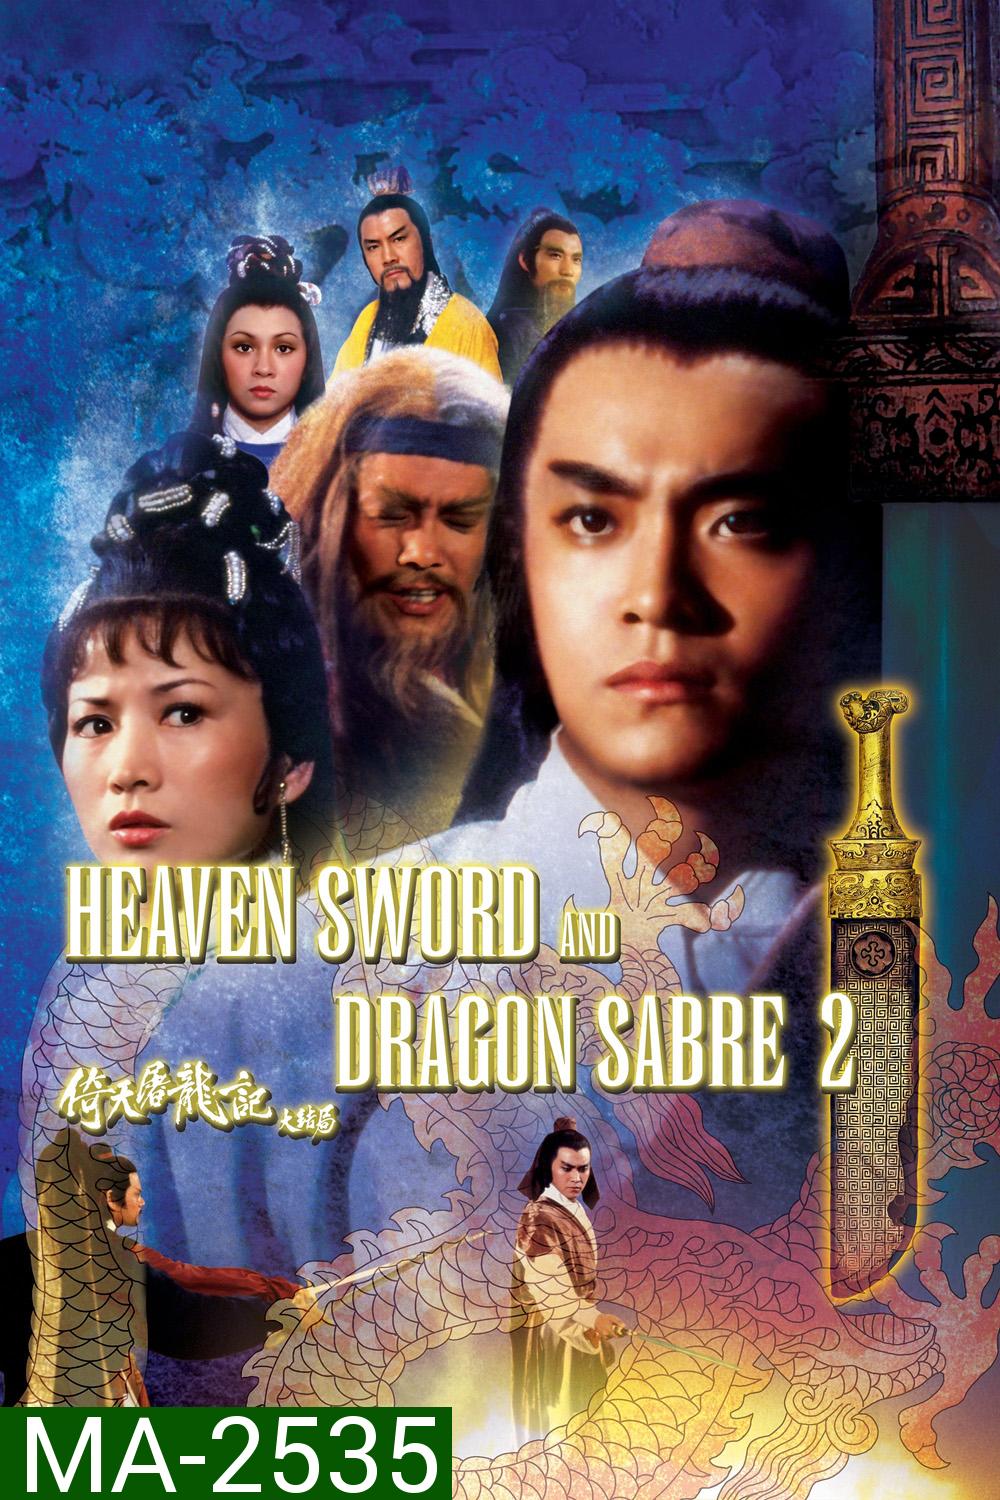 Heaven Sword and Dragon Sabre 2 (1978) ลูกมังกรหยก 2